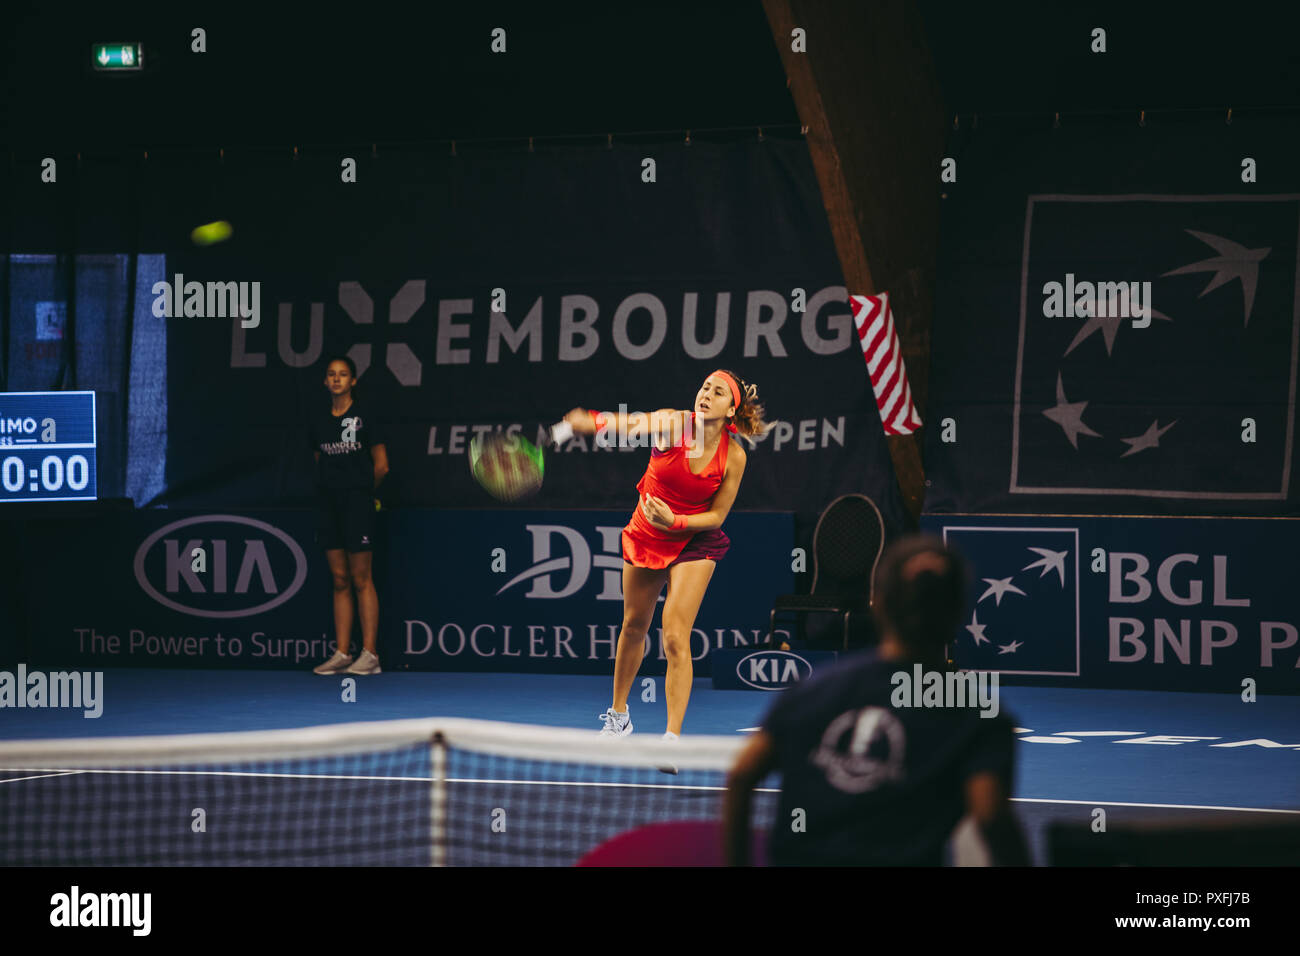 LUXEMBOURG/LUXEMBOURG - October 20th, 2018: WTA BGL BNPPARIBAS Luxembourg open - Final match between Julia Görges and belinda Bencic Stock Photo